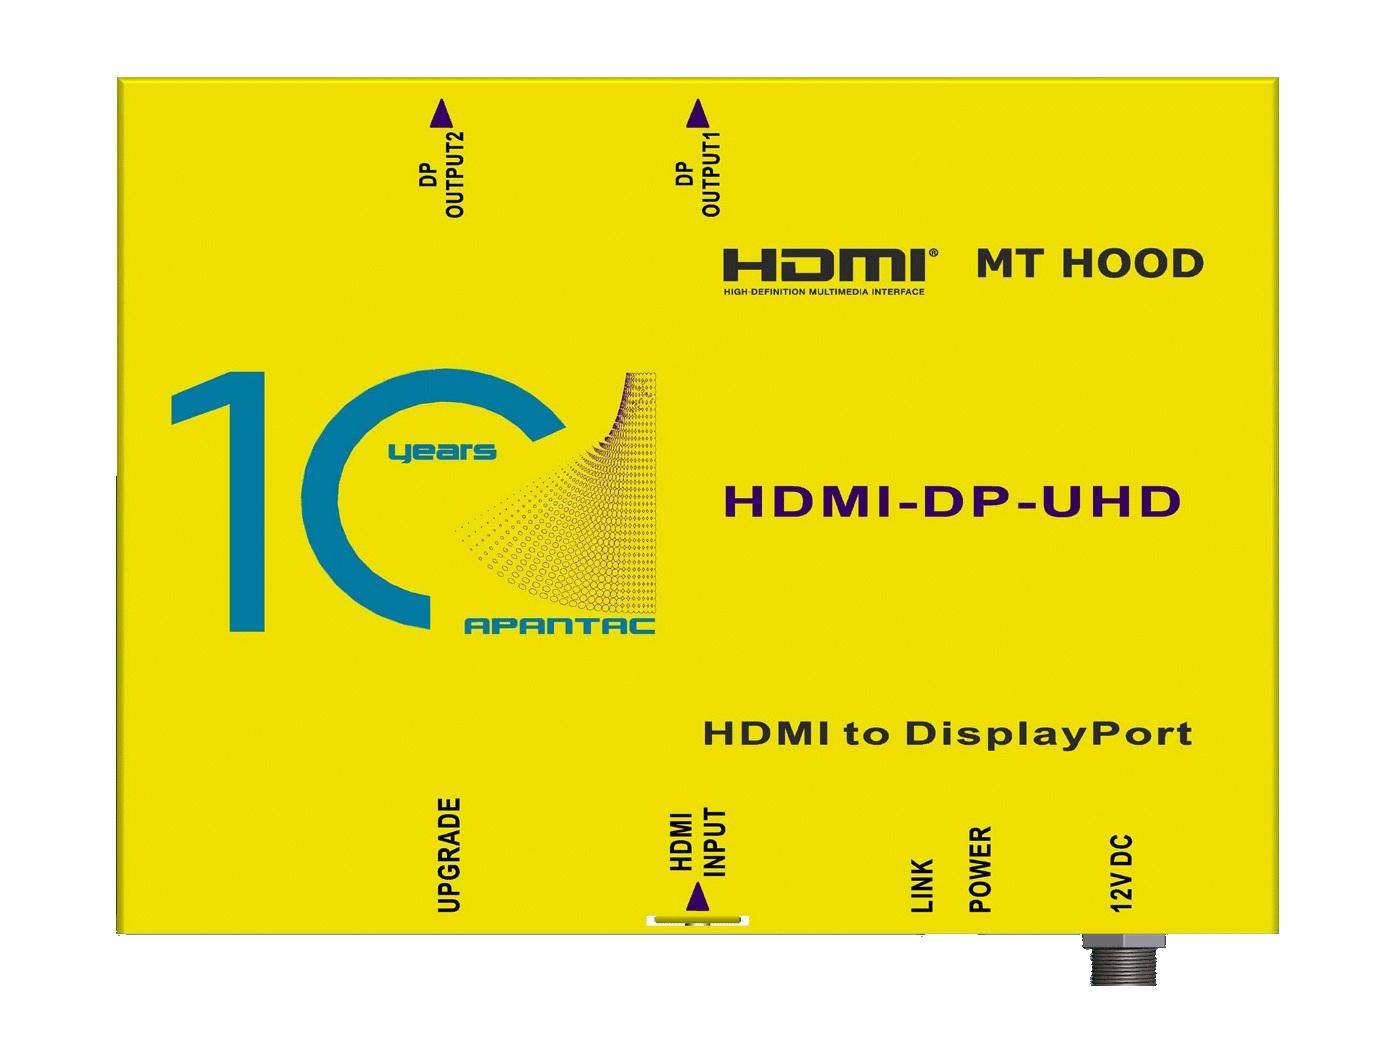 HDM-DP-UHD HDMI 2.0 to DP 1.2 Converter by Apantac